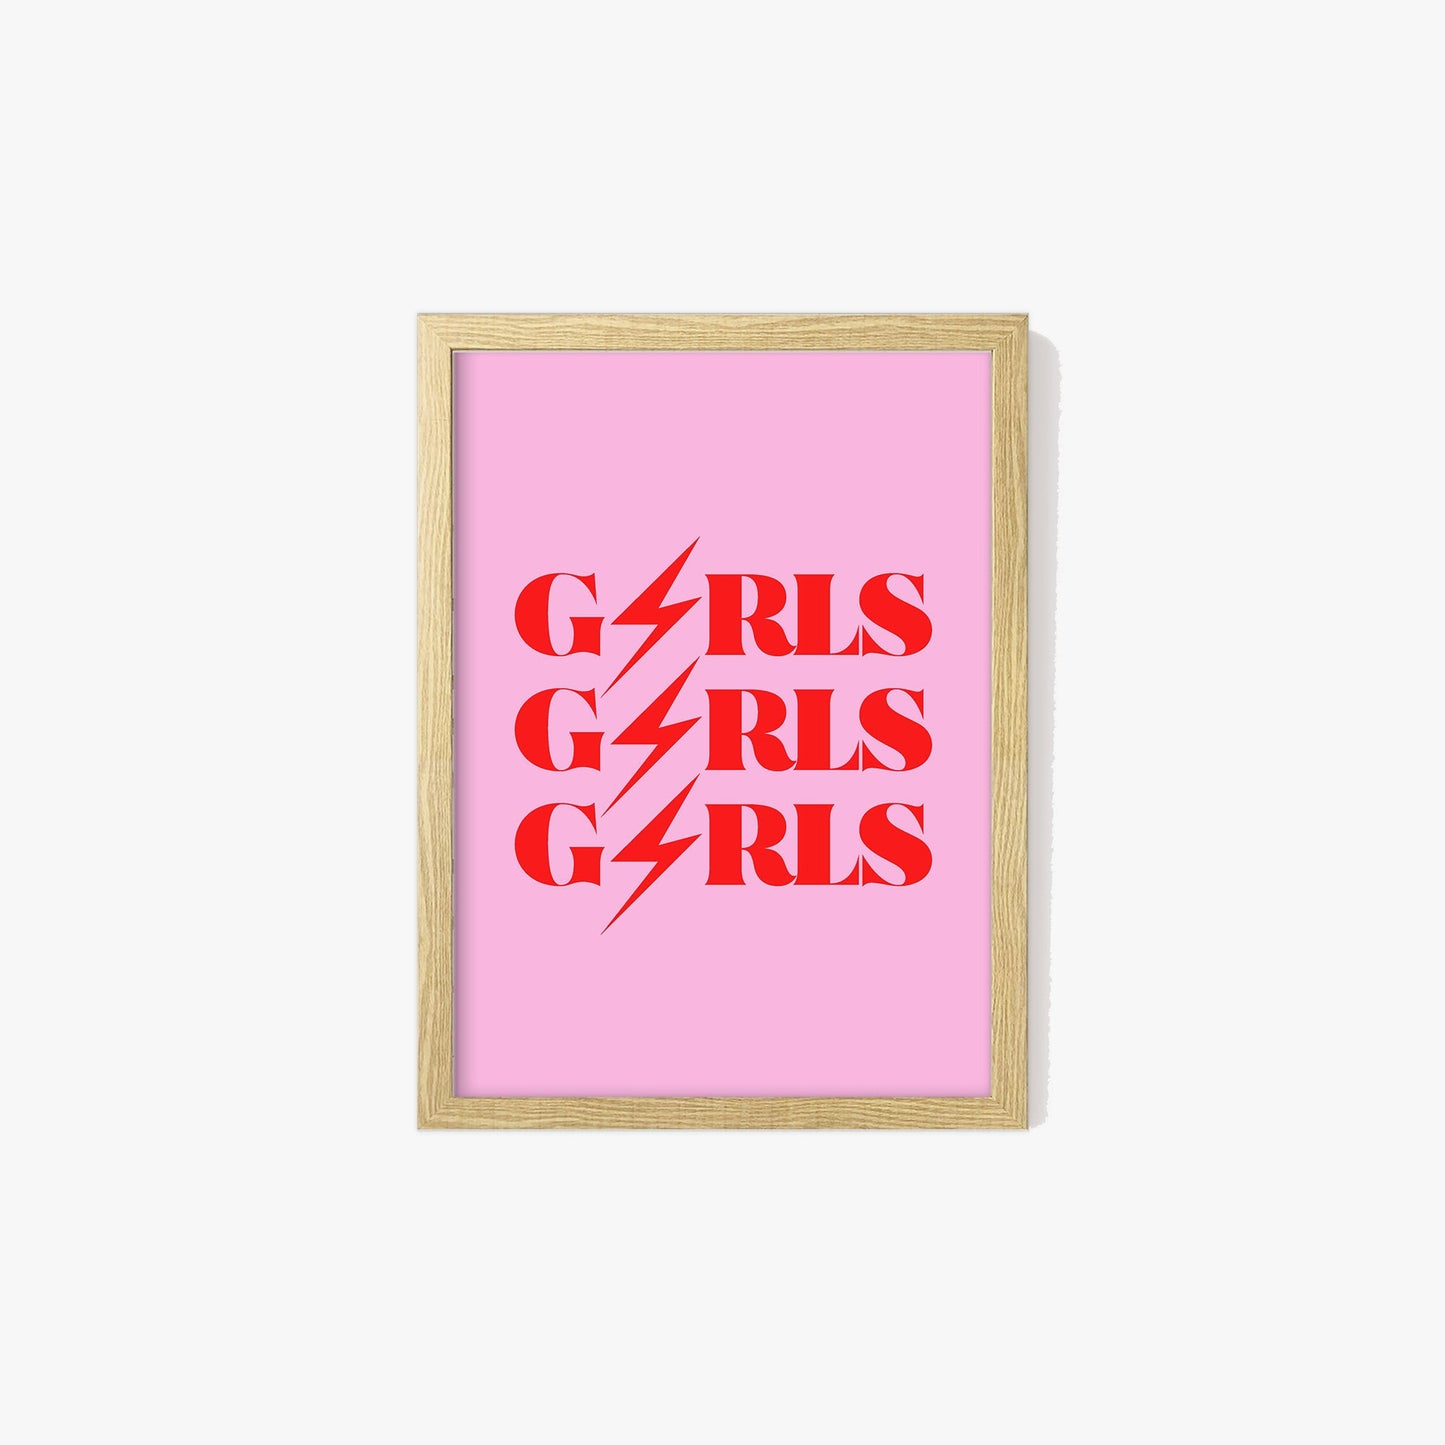 Girls Girls Girls Print